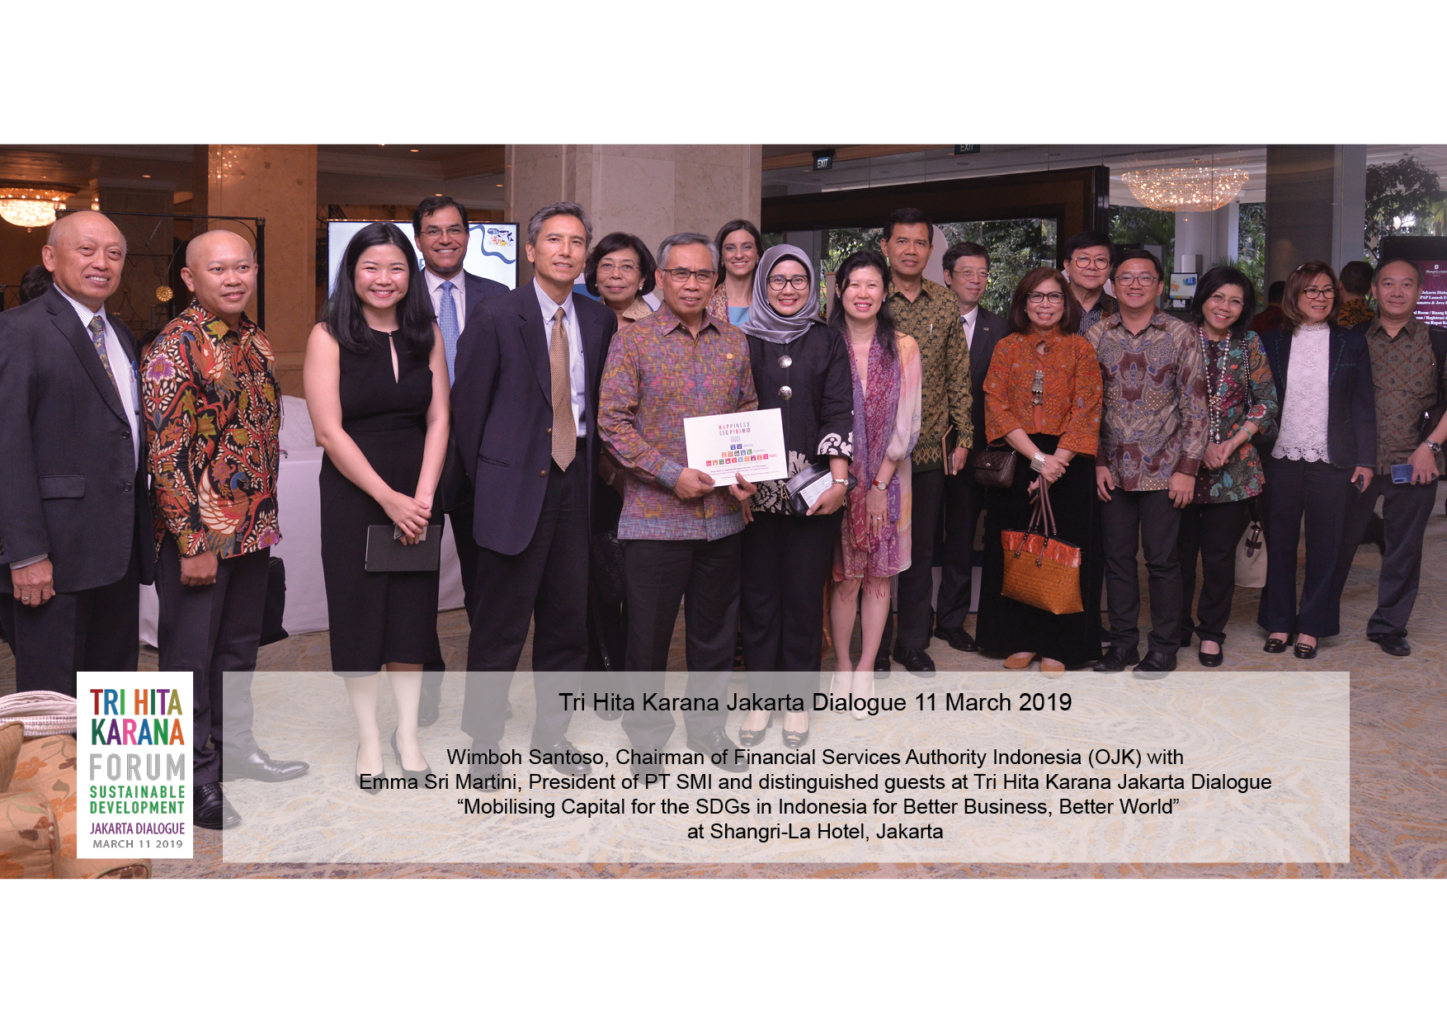 Tri Hita Karana Forum On Sustainable Development Bali 2018